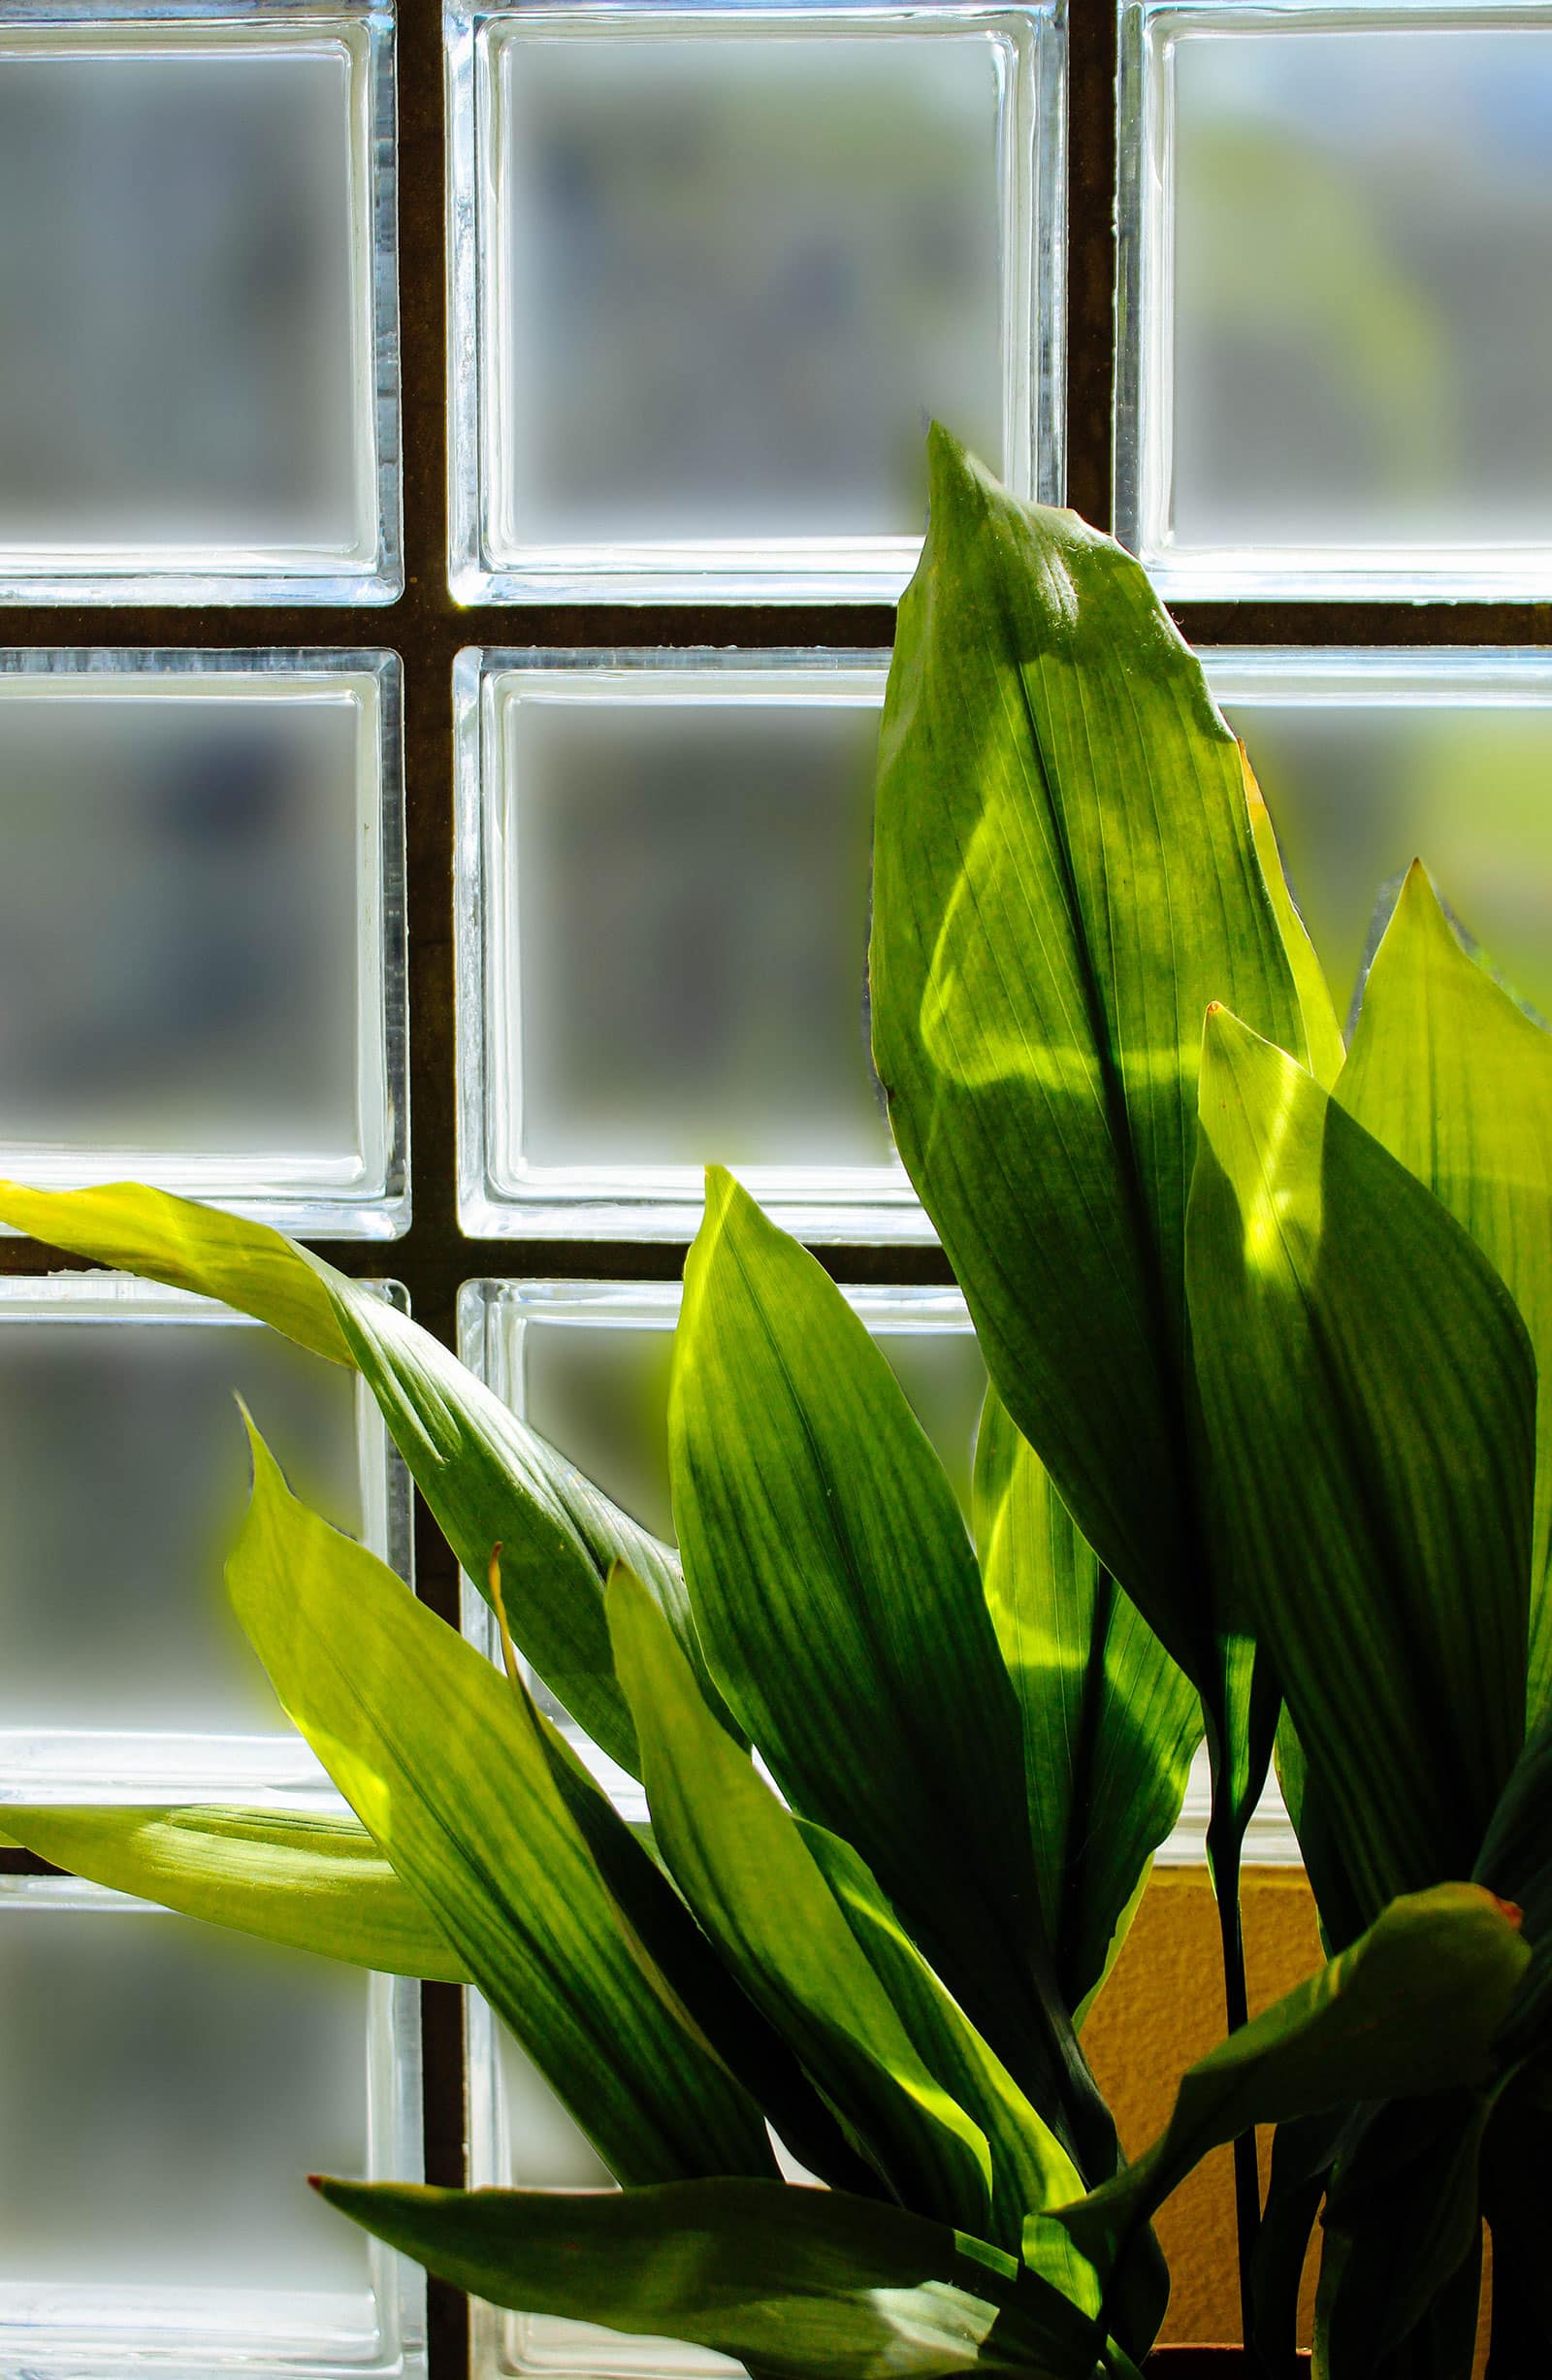 Cast iron plant (Aspidistra eliator) plant growing in a sunny glass-block window